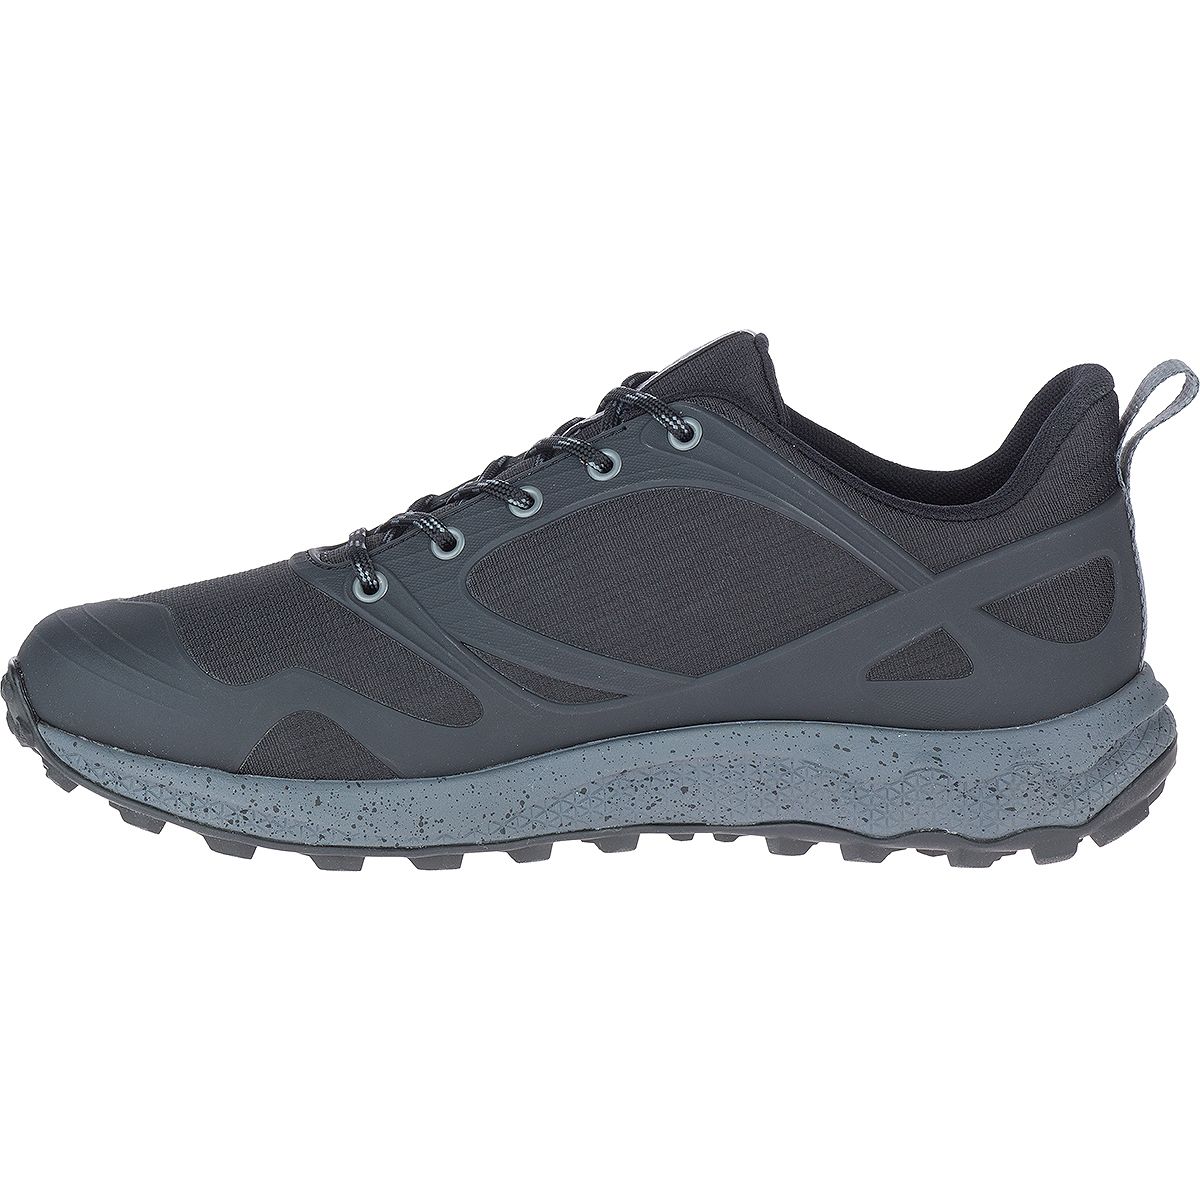 Merrell Altalight Hiking Shoe - Men's - Footwear